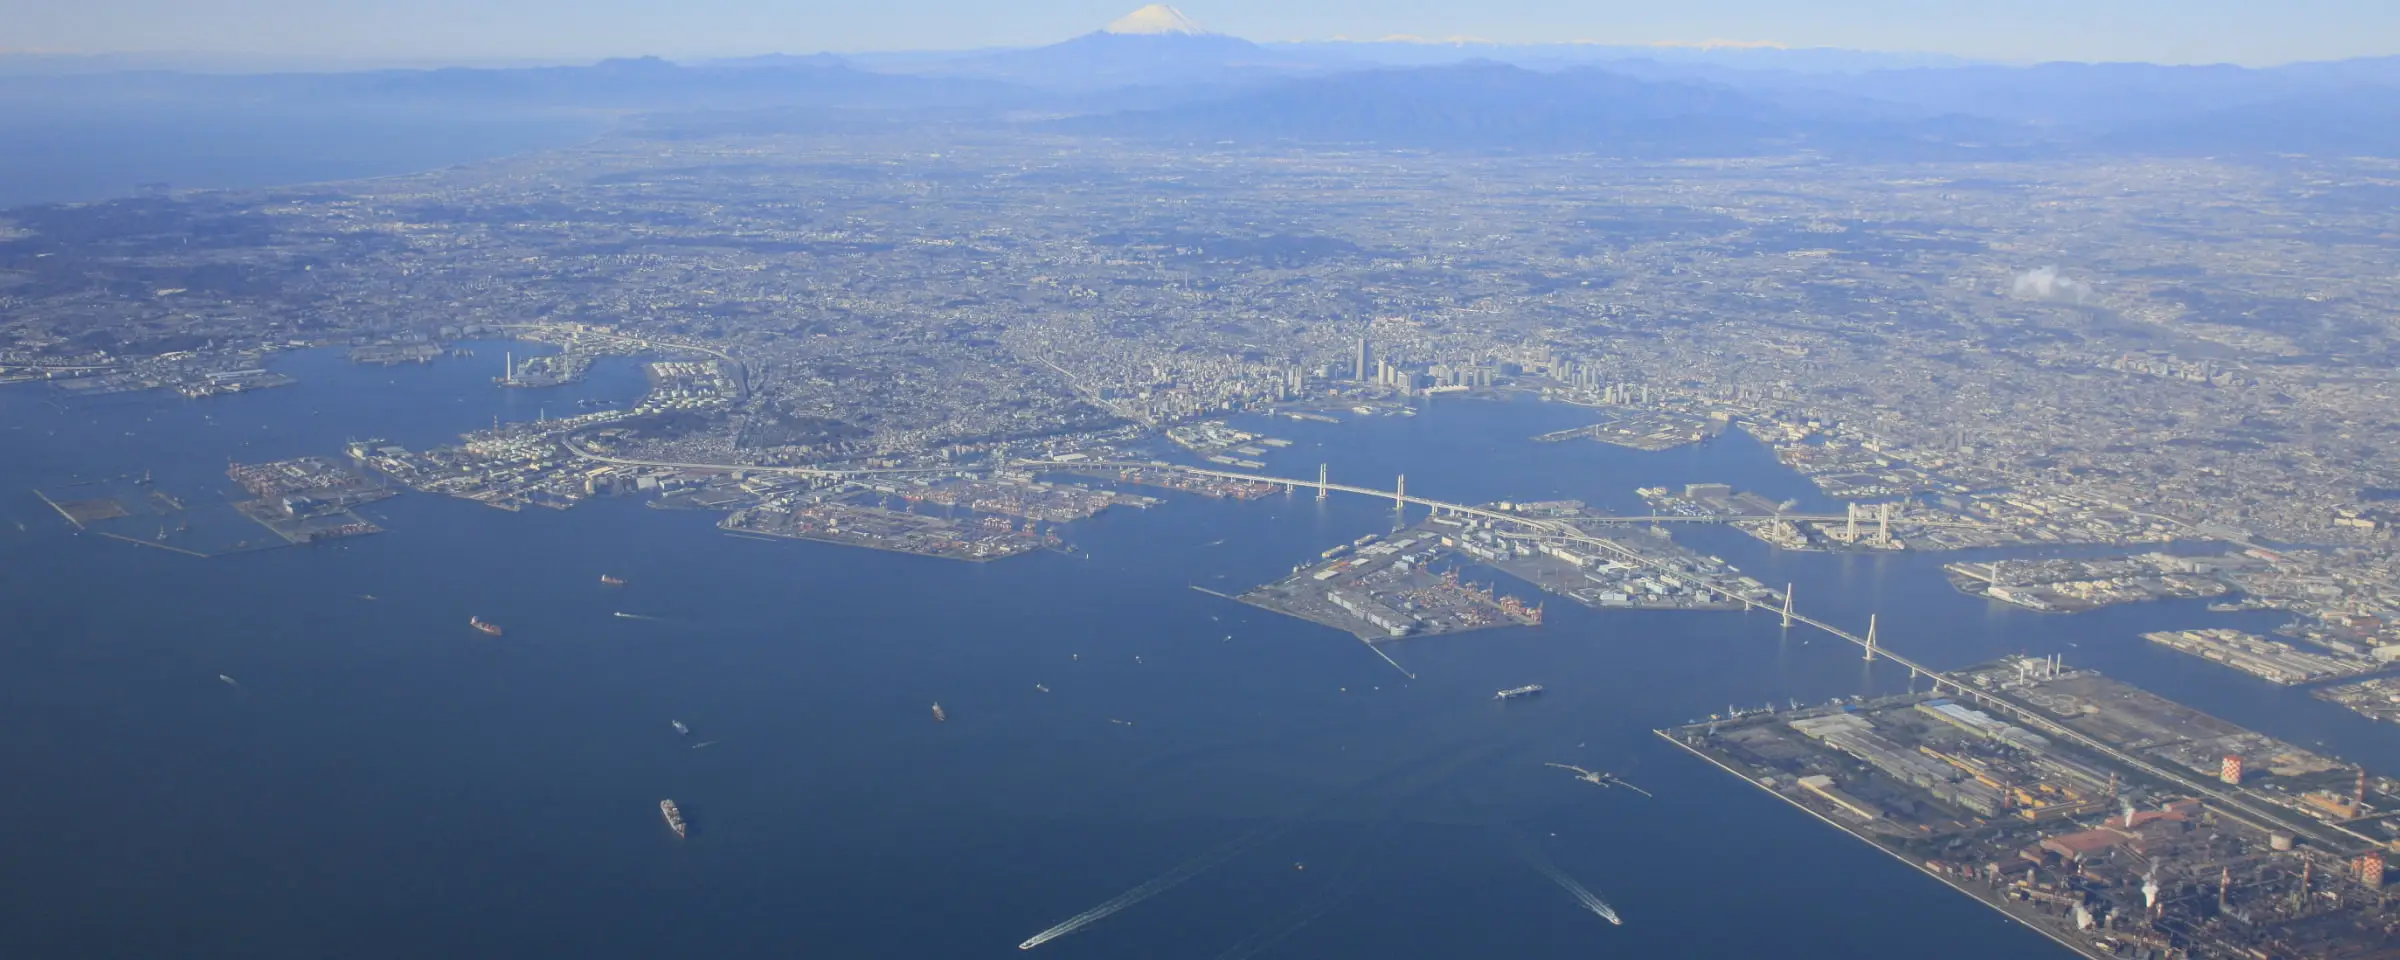 Over Tokyo Bay